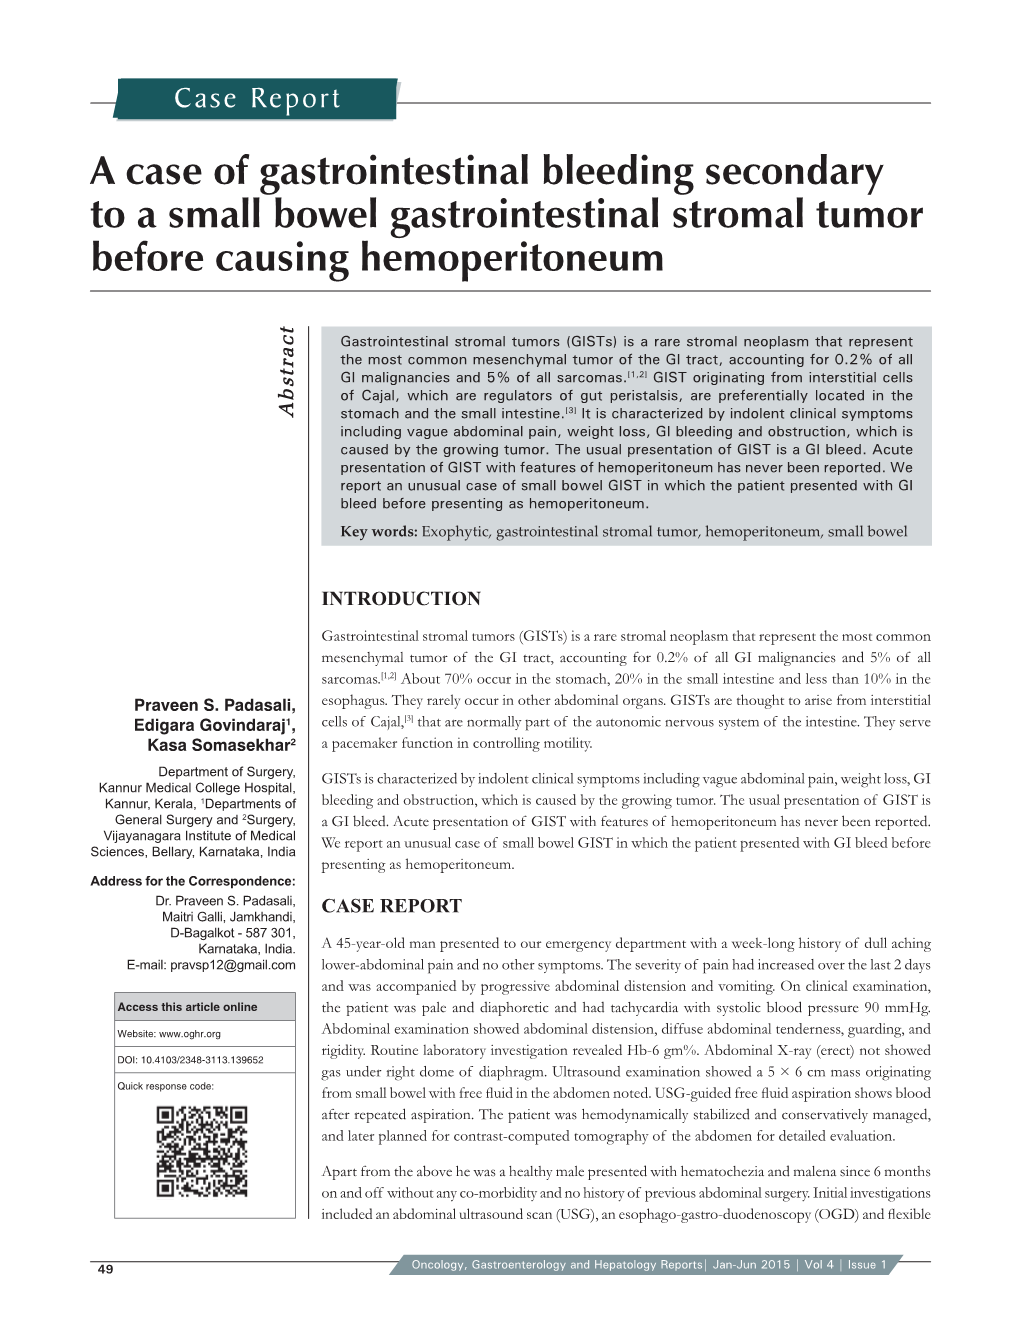 A Case of Gastrointestinal Bleeding Secondary to a Small Bowel Gastrointestinal Stromal Tumor Before Causing Hemoperitoneum